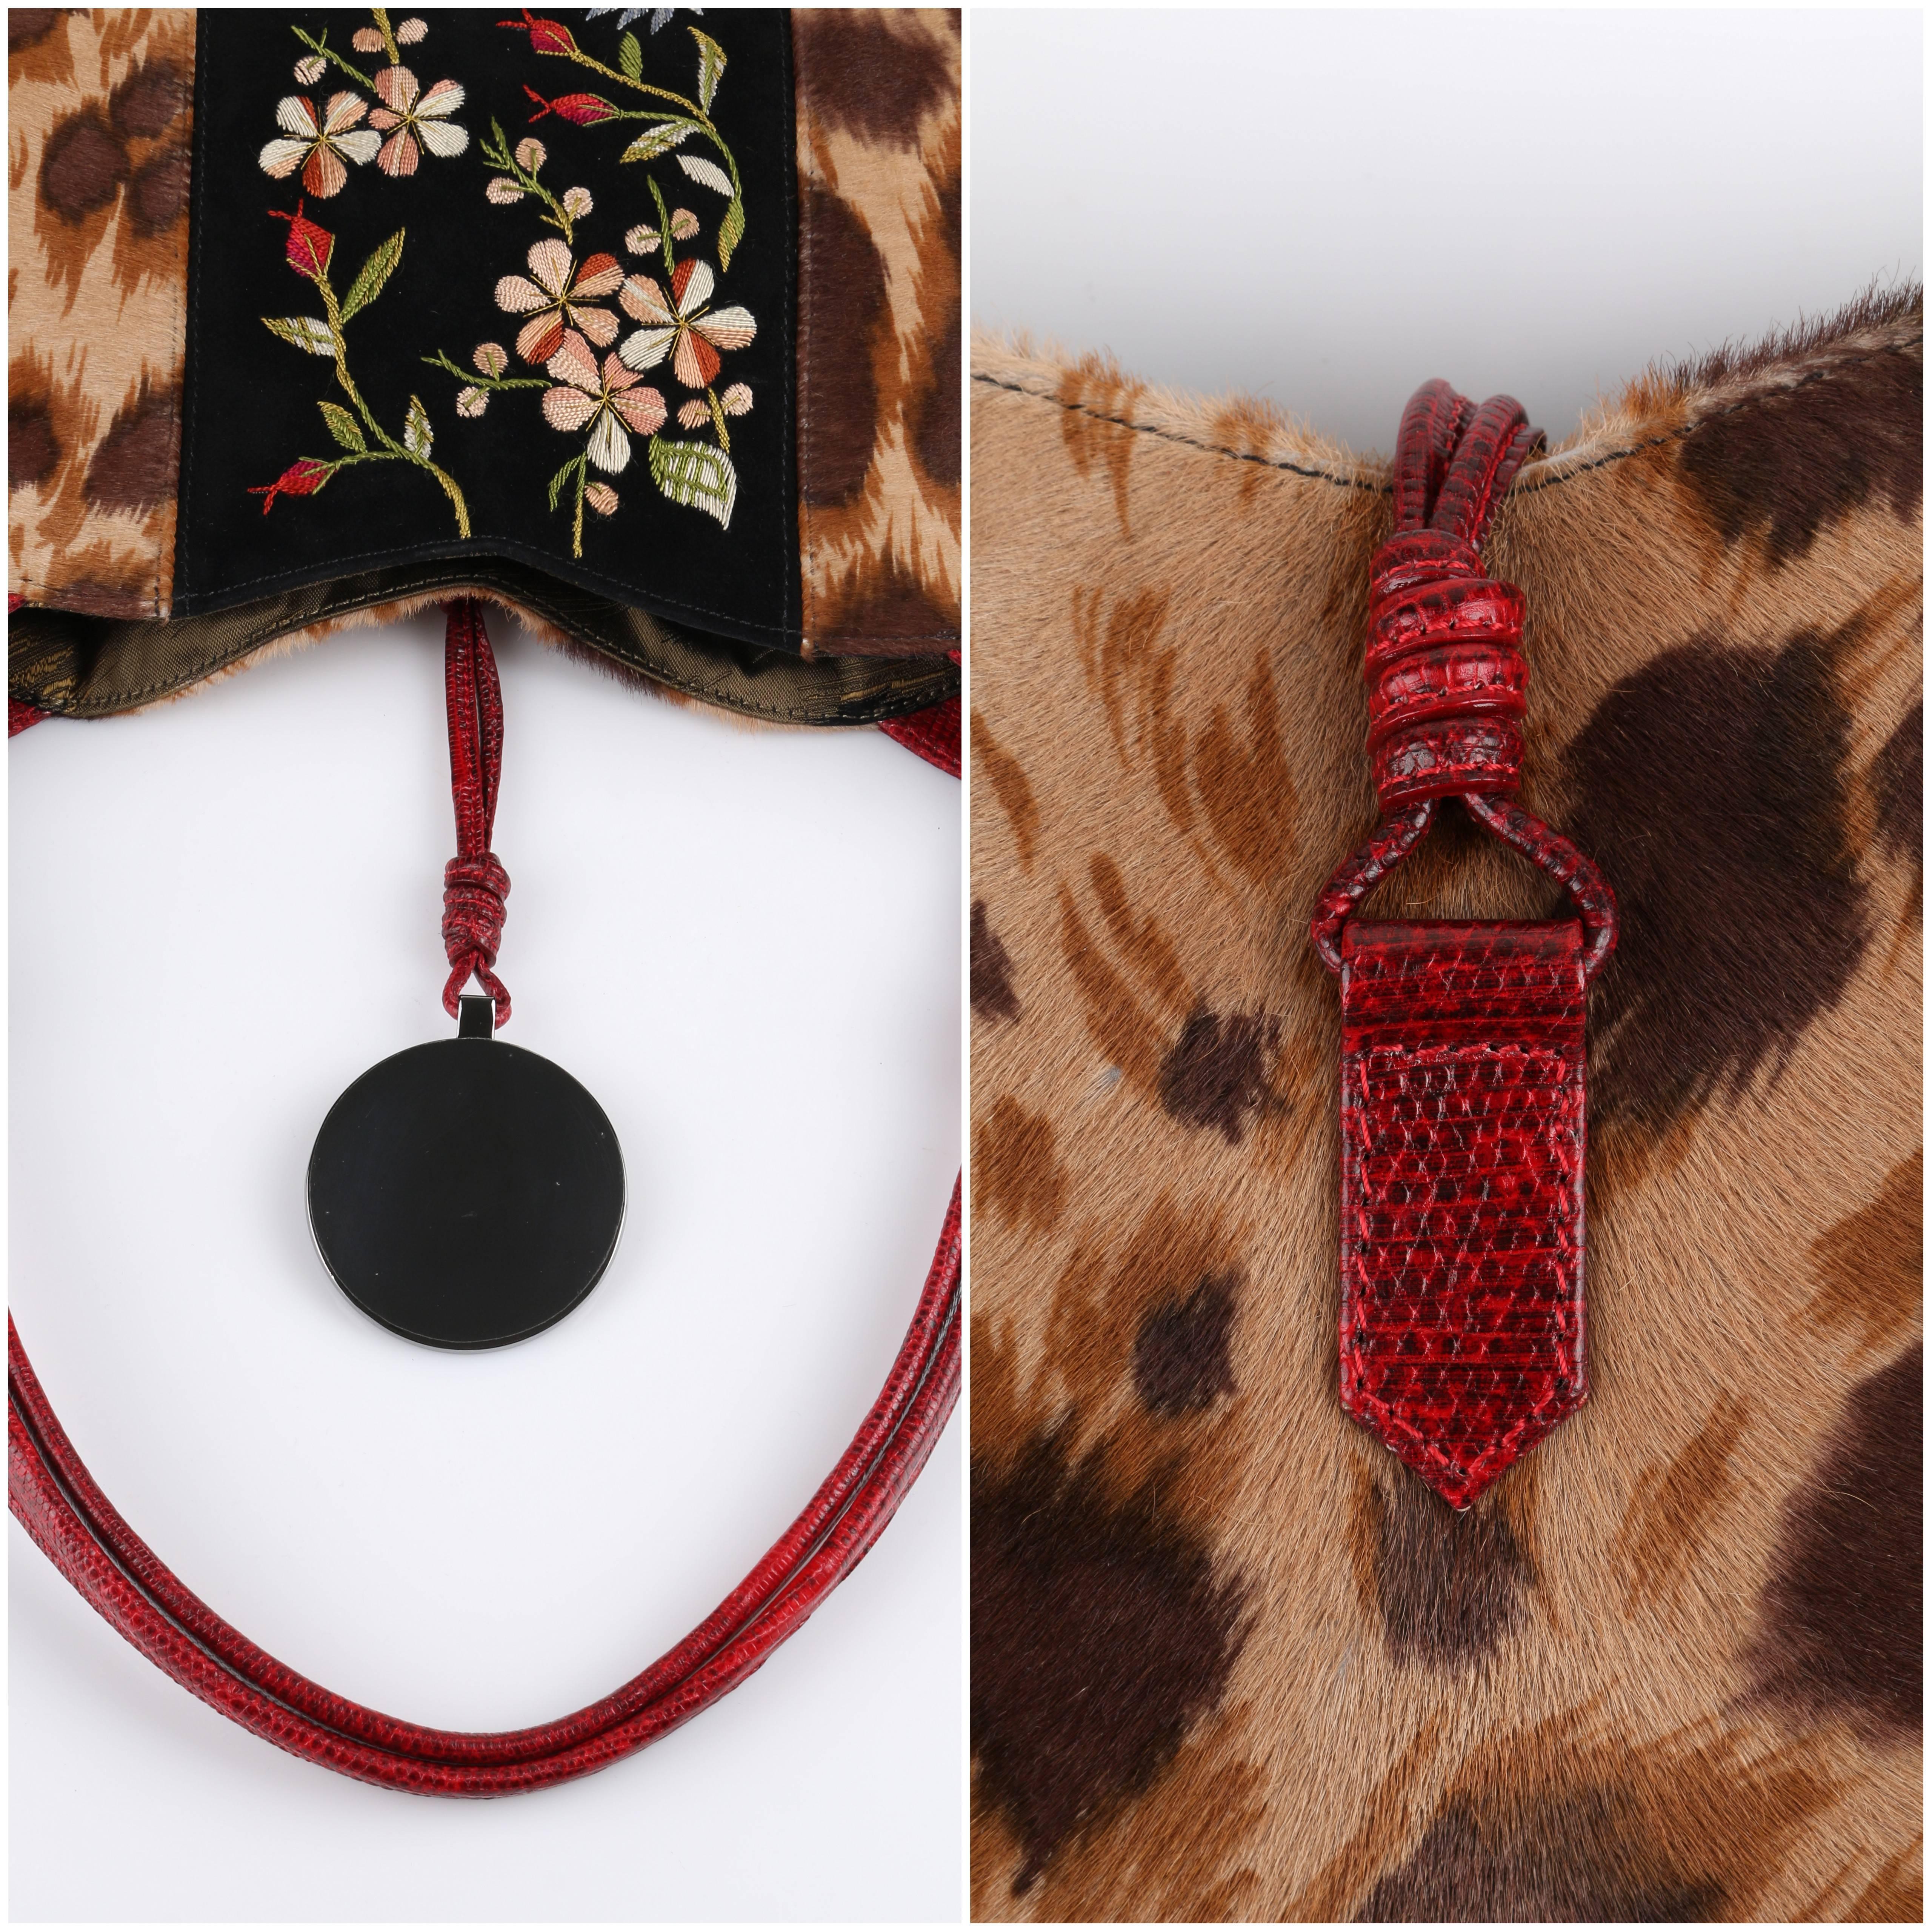 VALENTINO GARAVANI Pony Hair Lizard Skin Leather Floral Embroidered Handbag 1